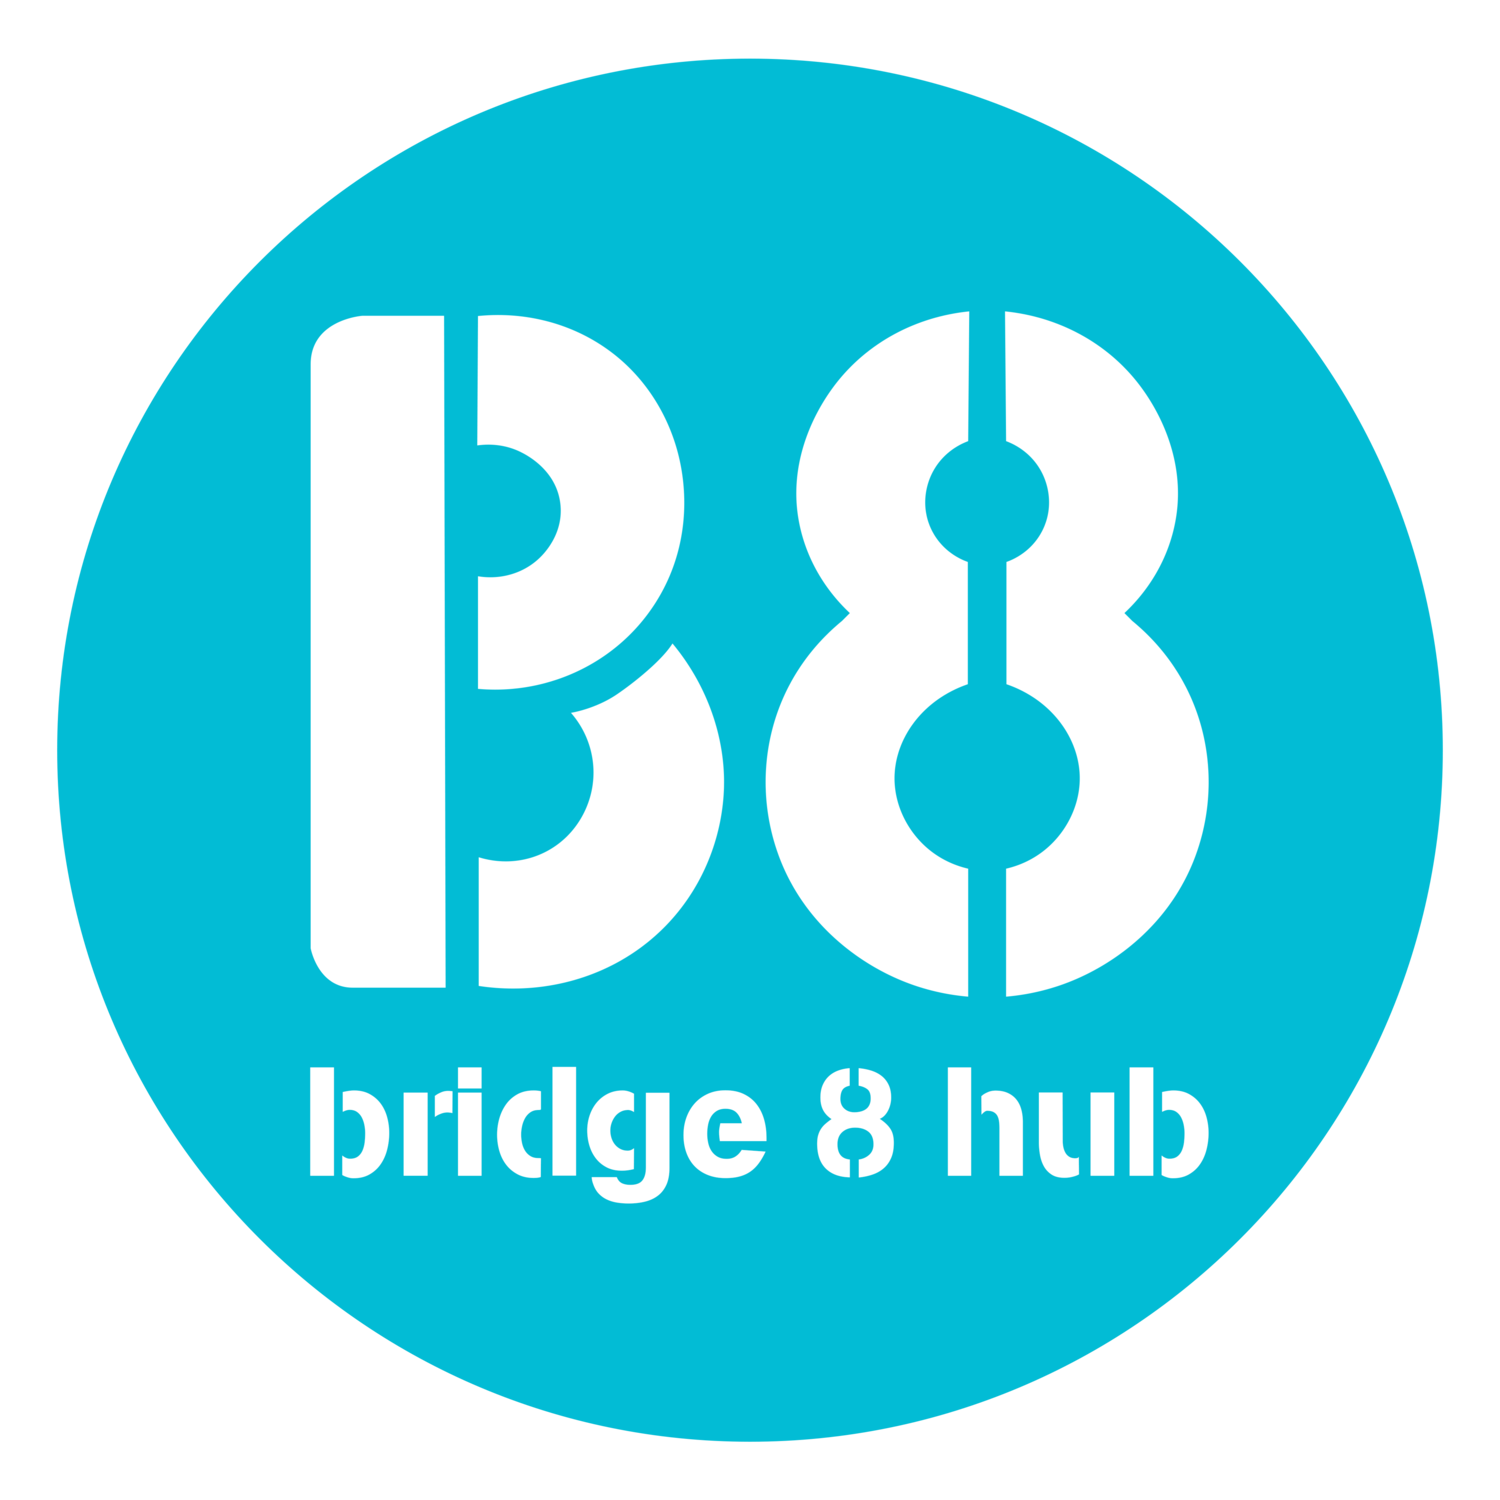 BRIDGE 8 HUB